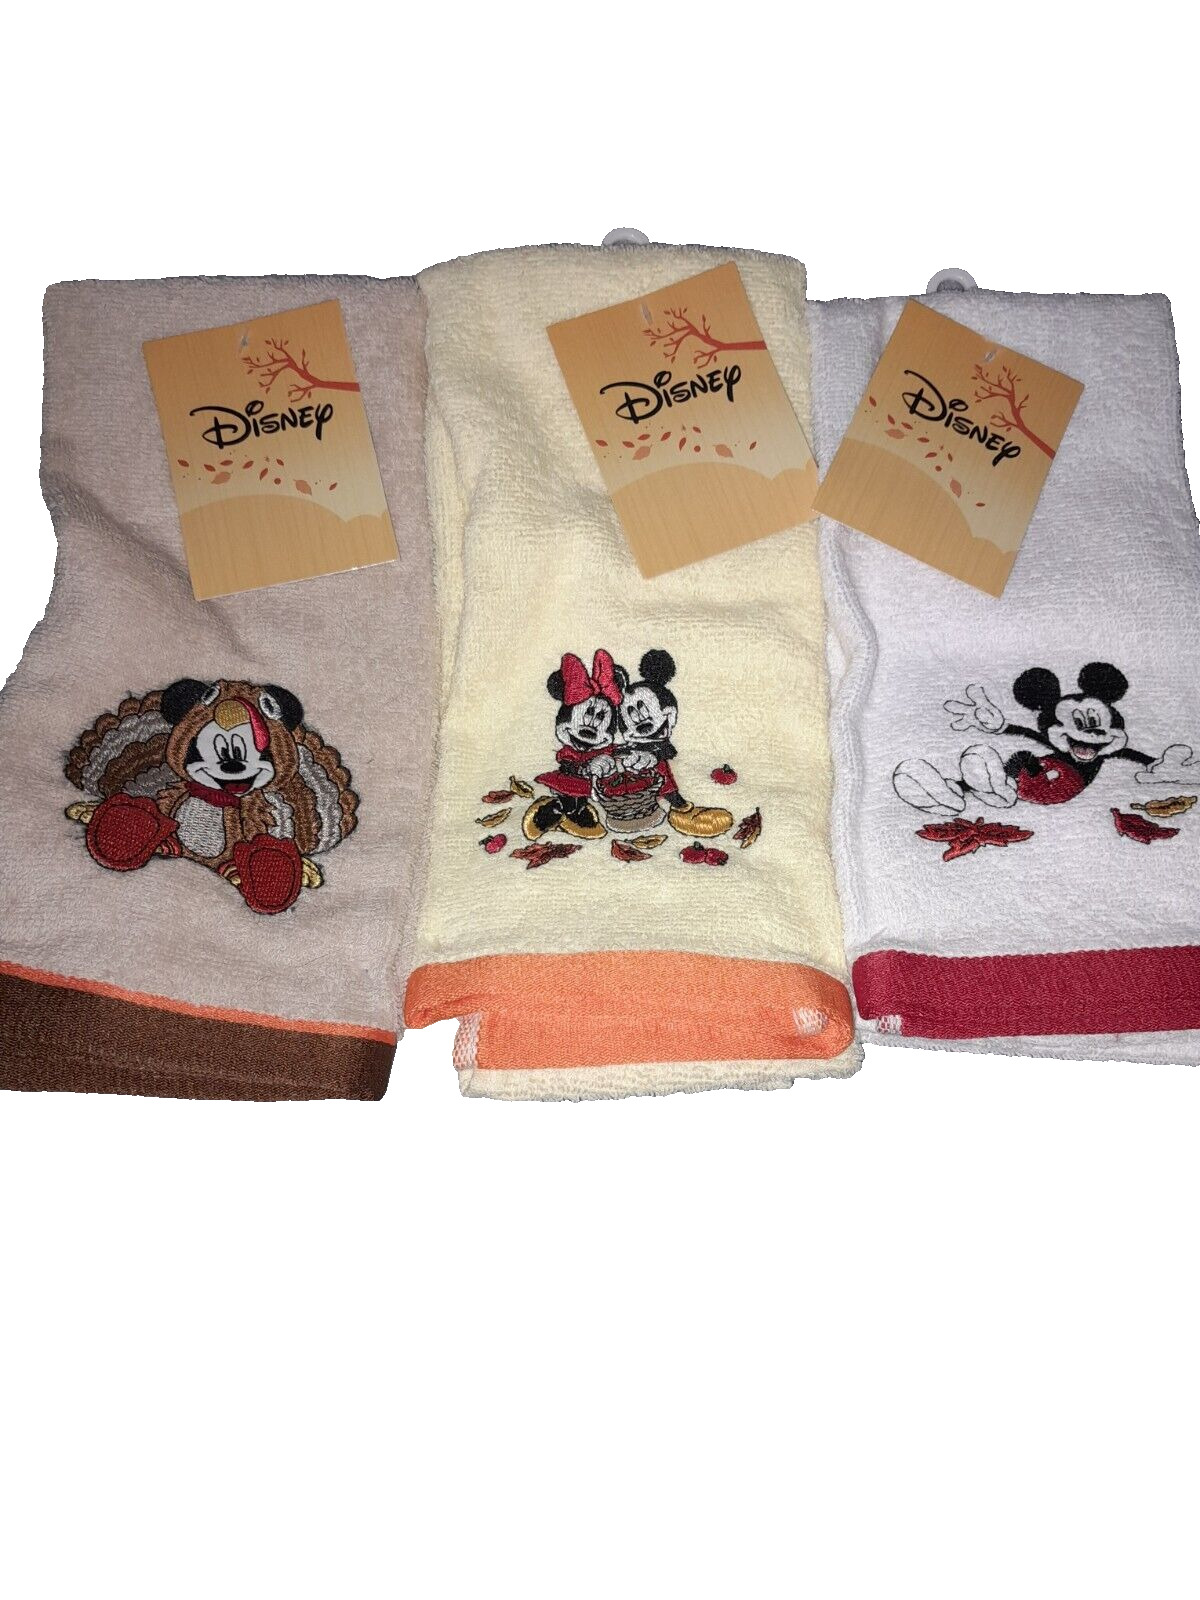 3 NEW Disney Mickey Minnie Mouse Fall Harvest Autumn Leaves Turkey Hand Towels